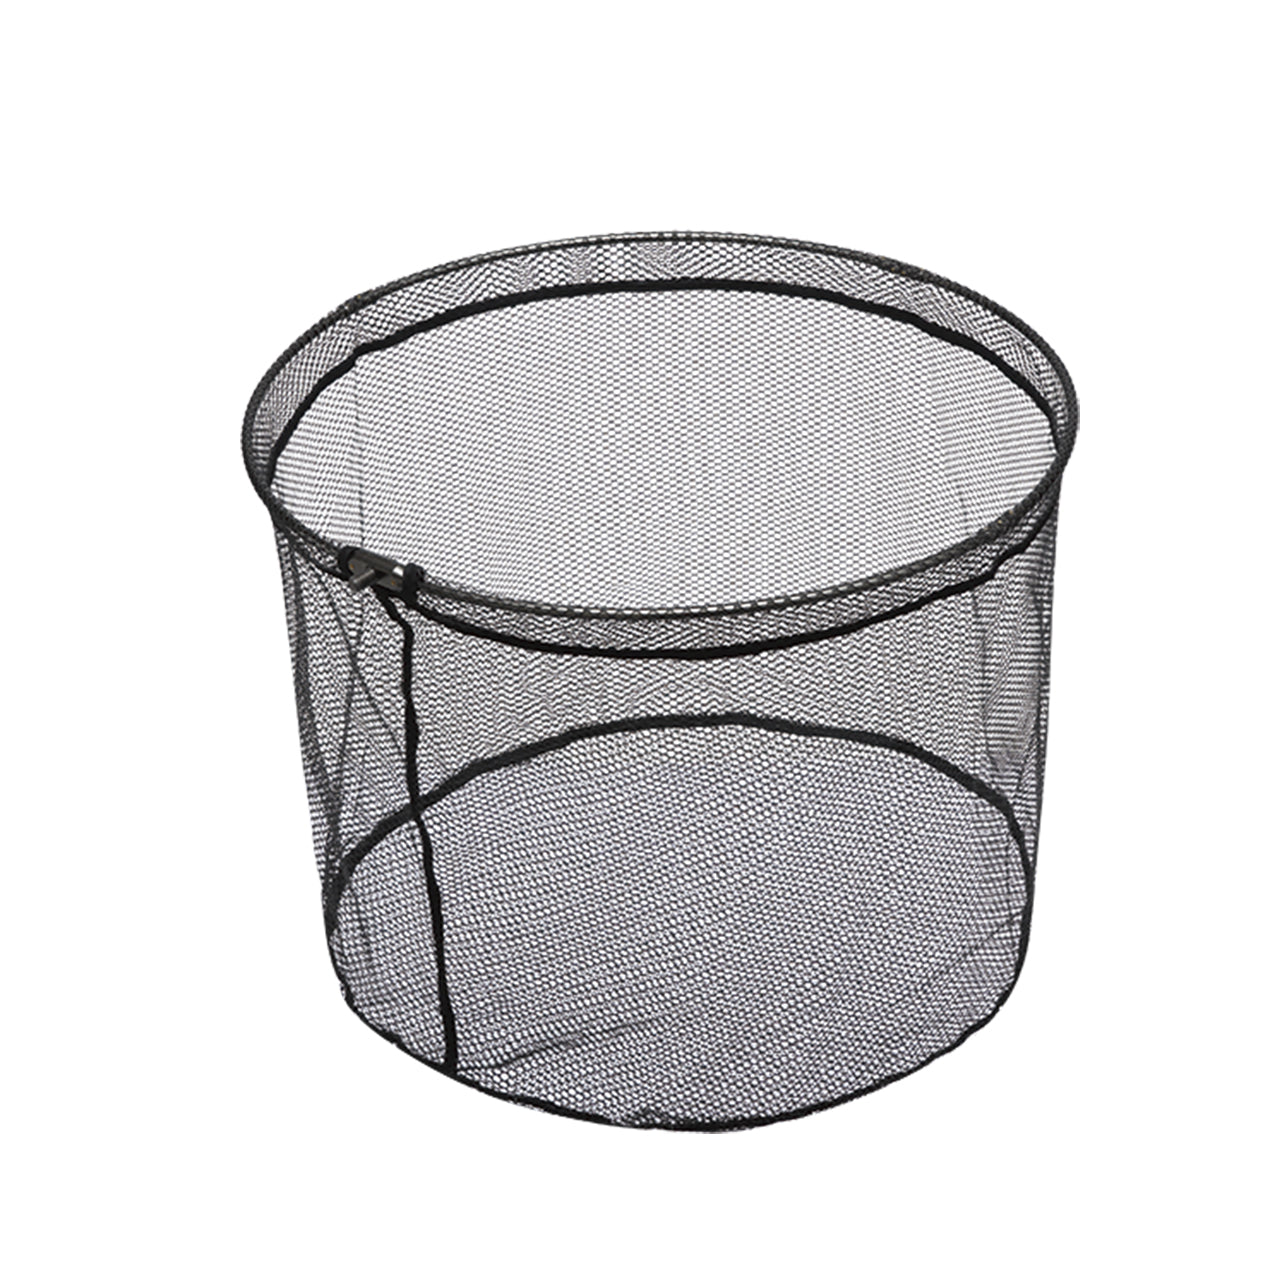 ■ (Shipping fee 370 yen) Aluminum frame (four-fold) with rubber coating net